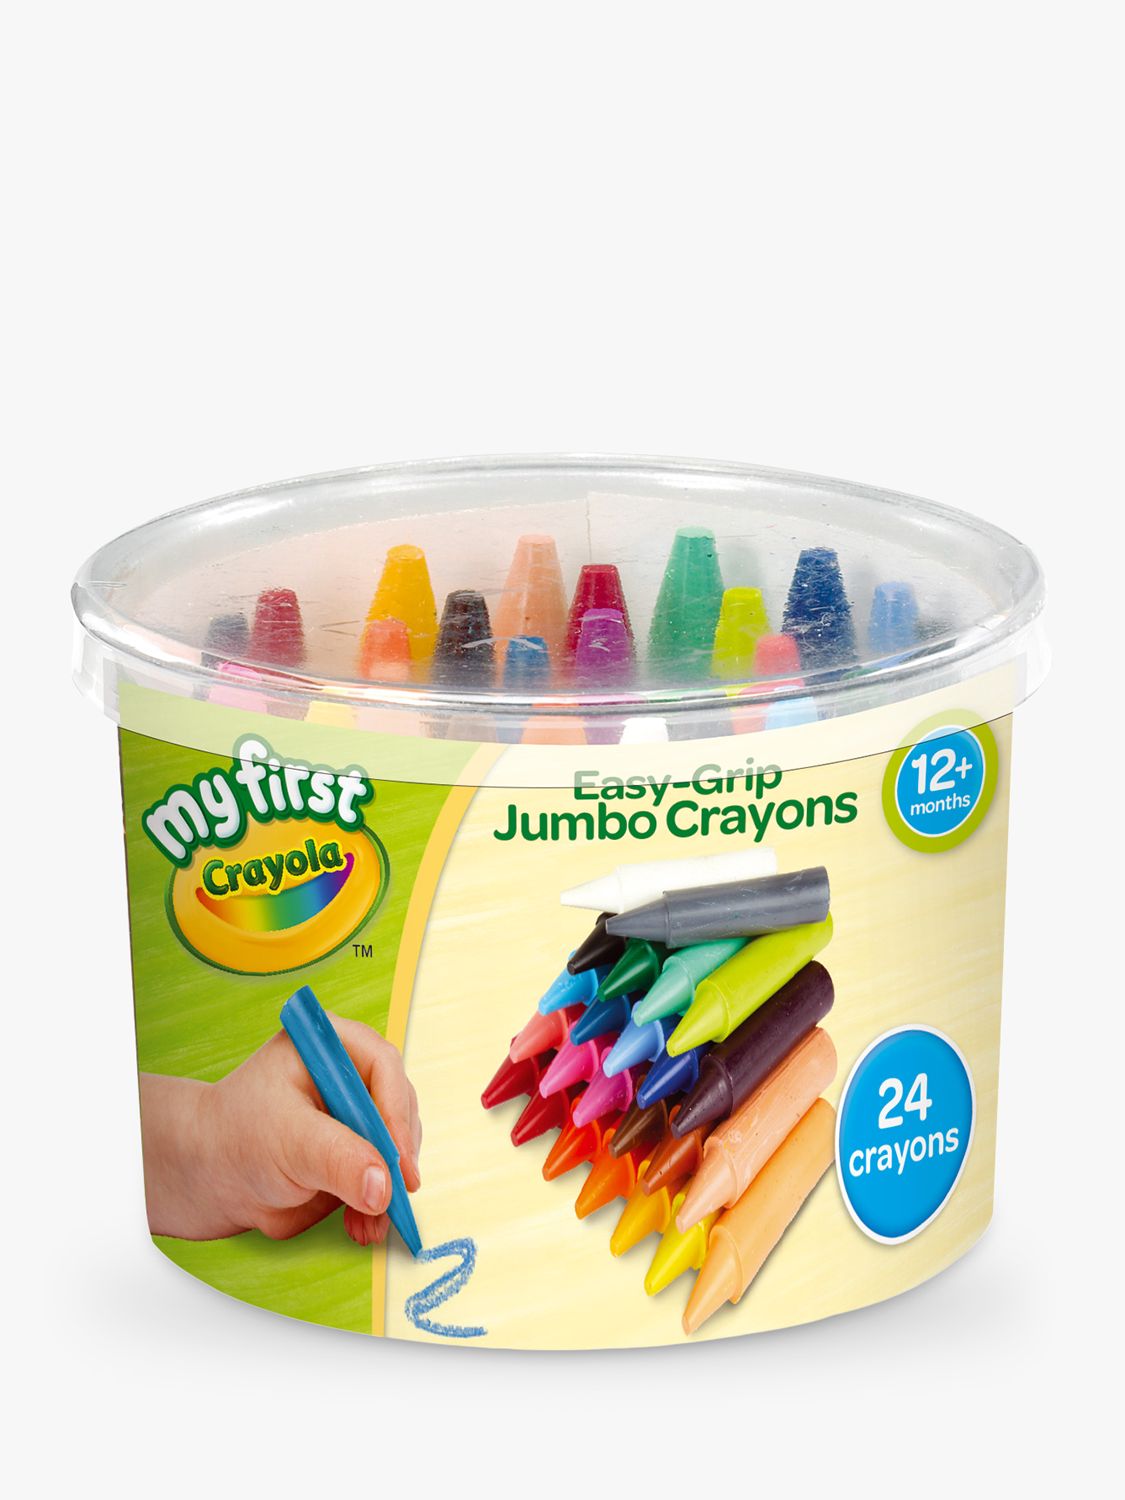 24 My First Crayola Jumbo Crayons